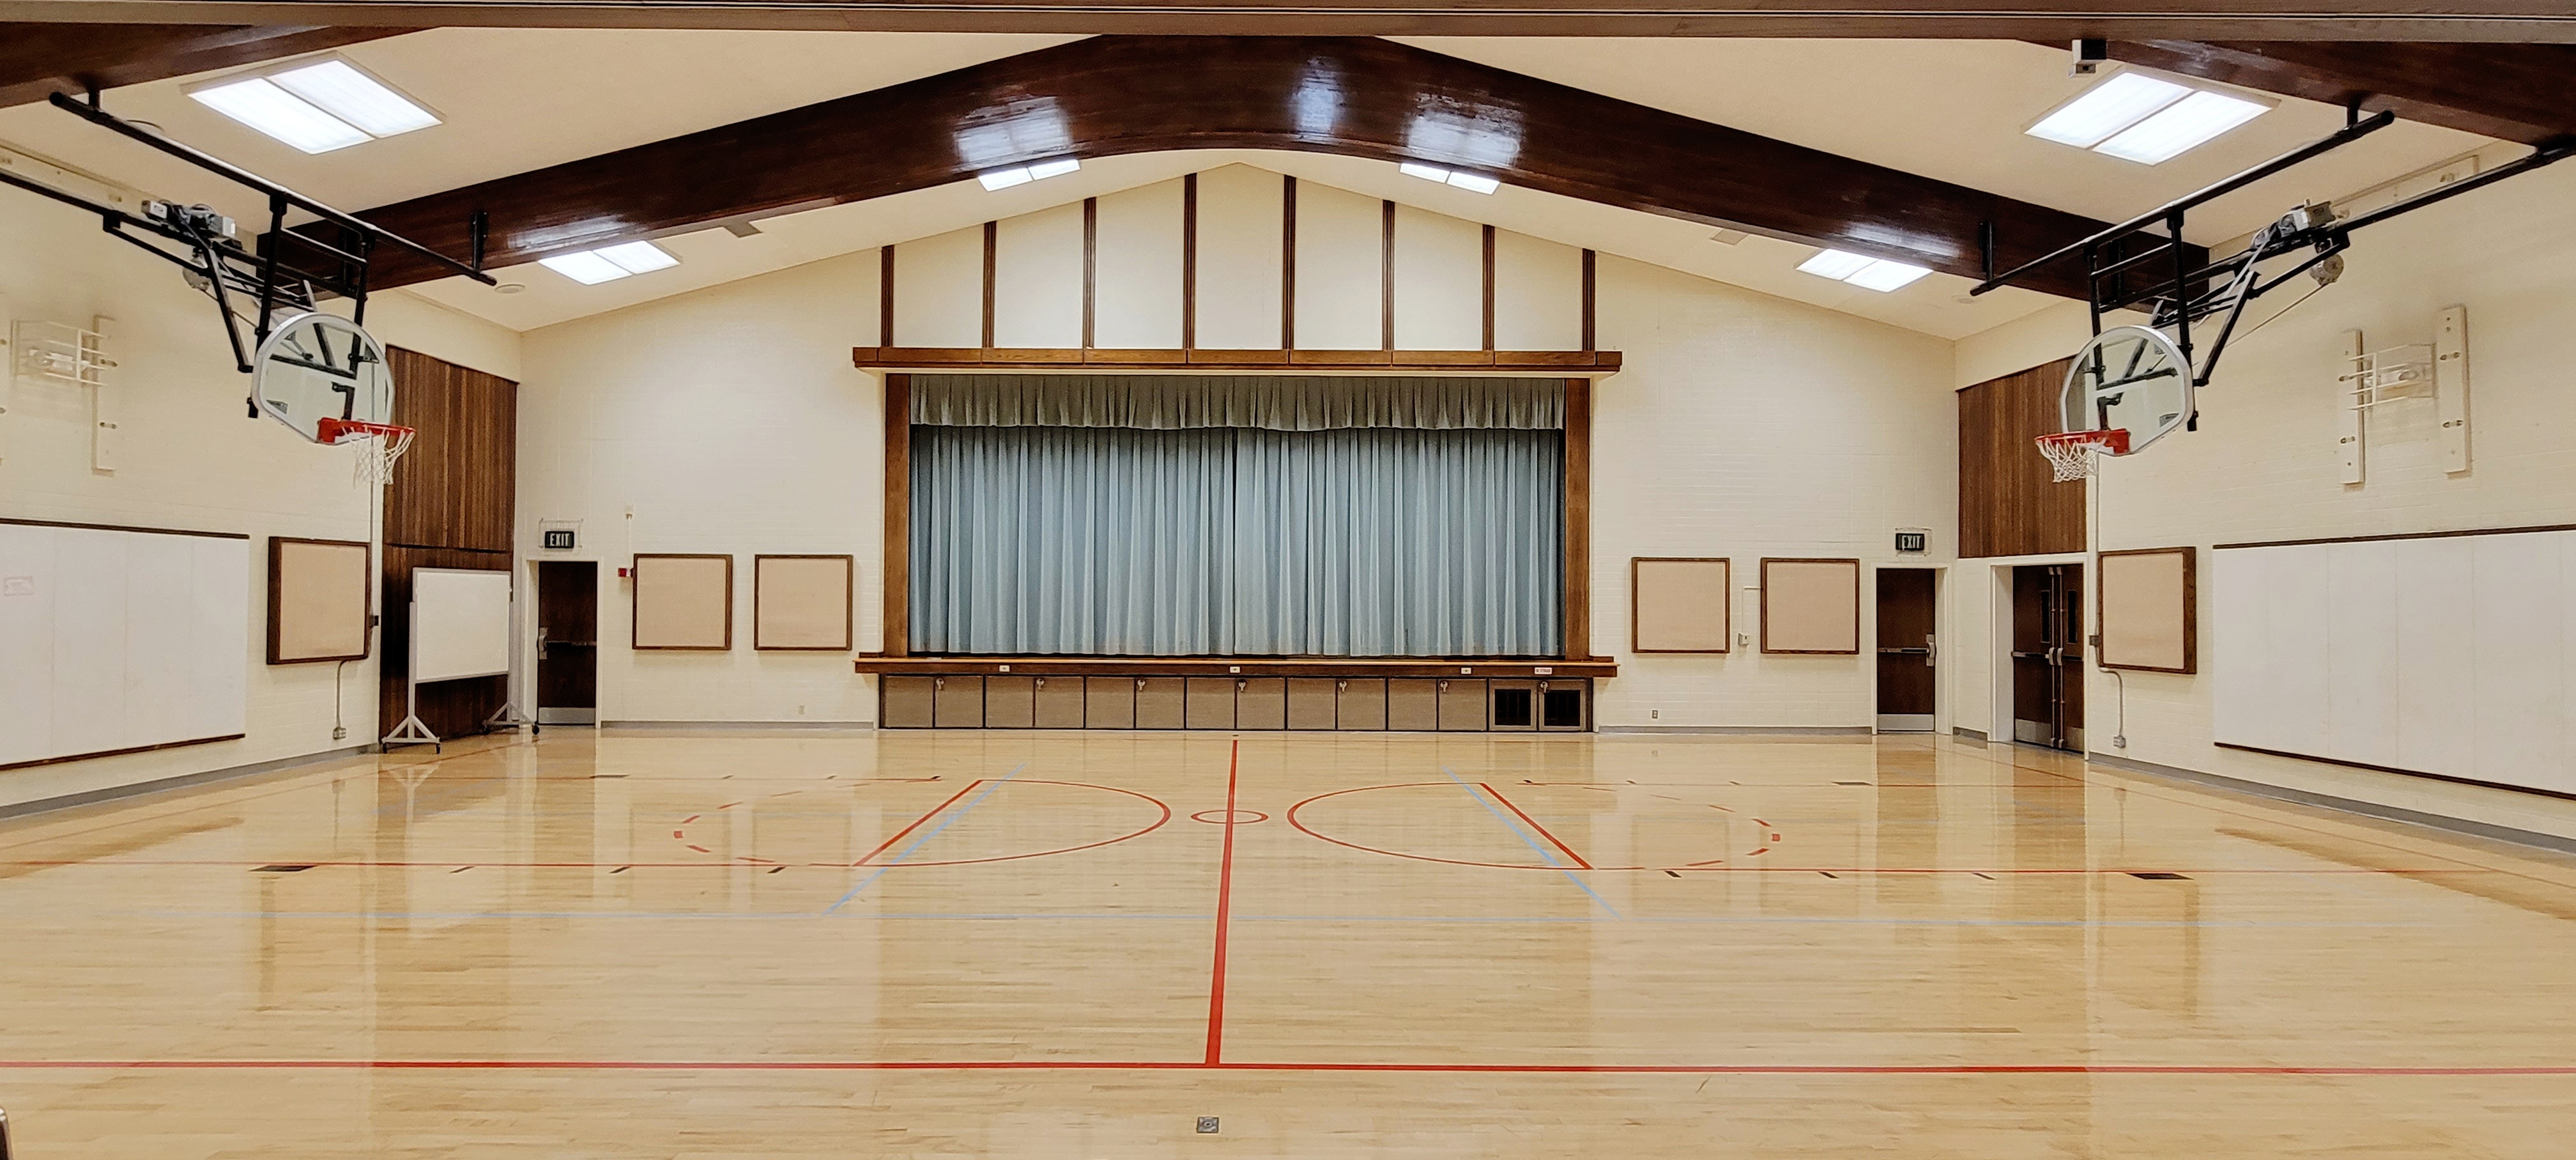 Lakeridge Building gym of The Church of Jesus Christ of Latter-day Saints in Lake Oswego, Oregon